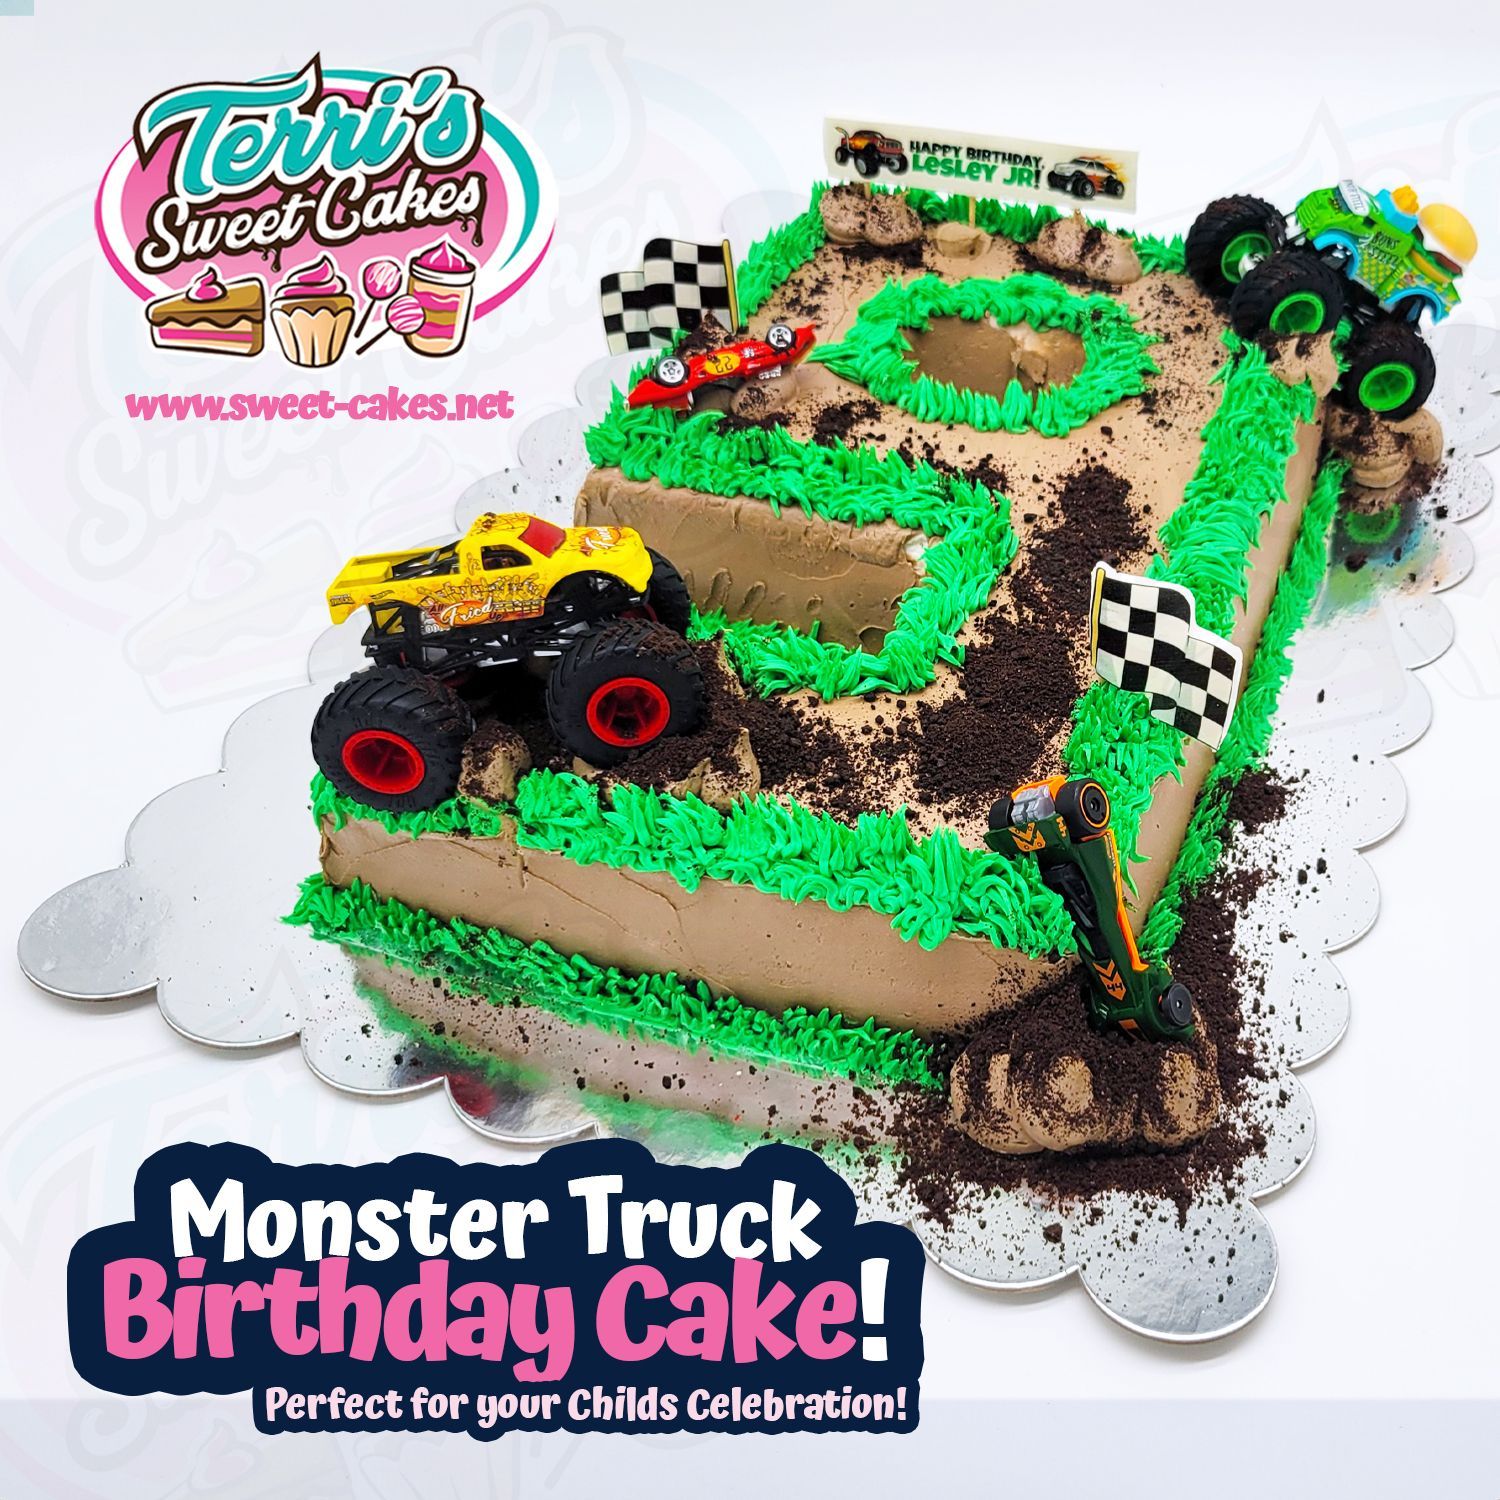 Monster Truck Birthday Cake by Terri's Sweet Cakes!